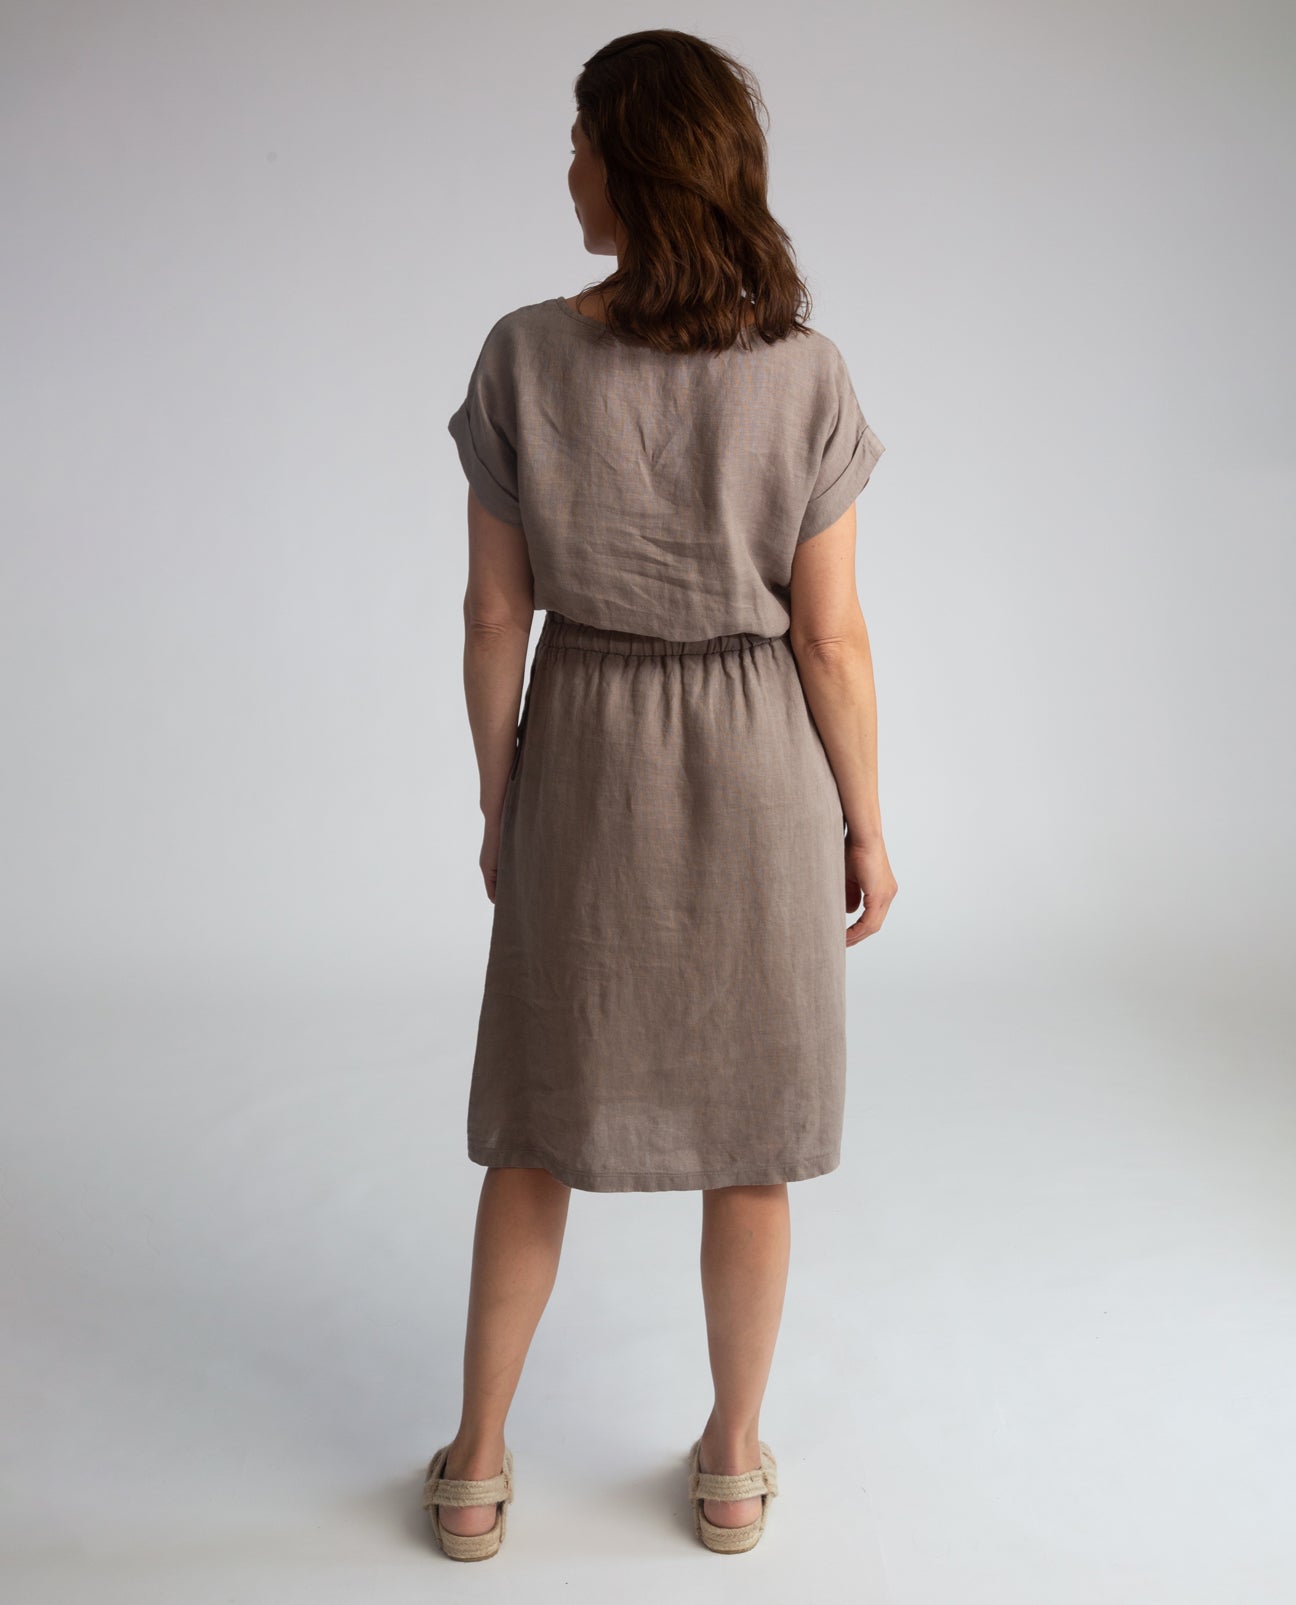 Marissa-May Linen Dress in Olive